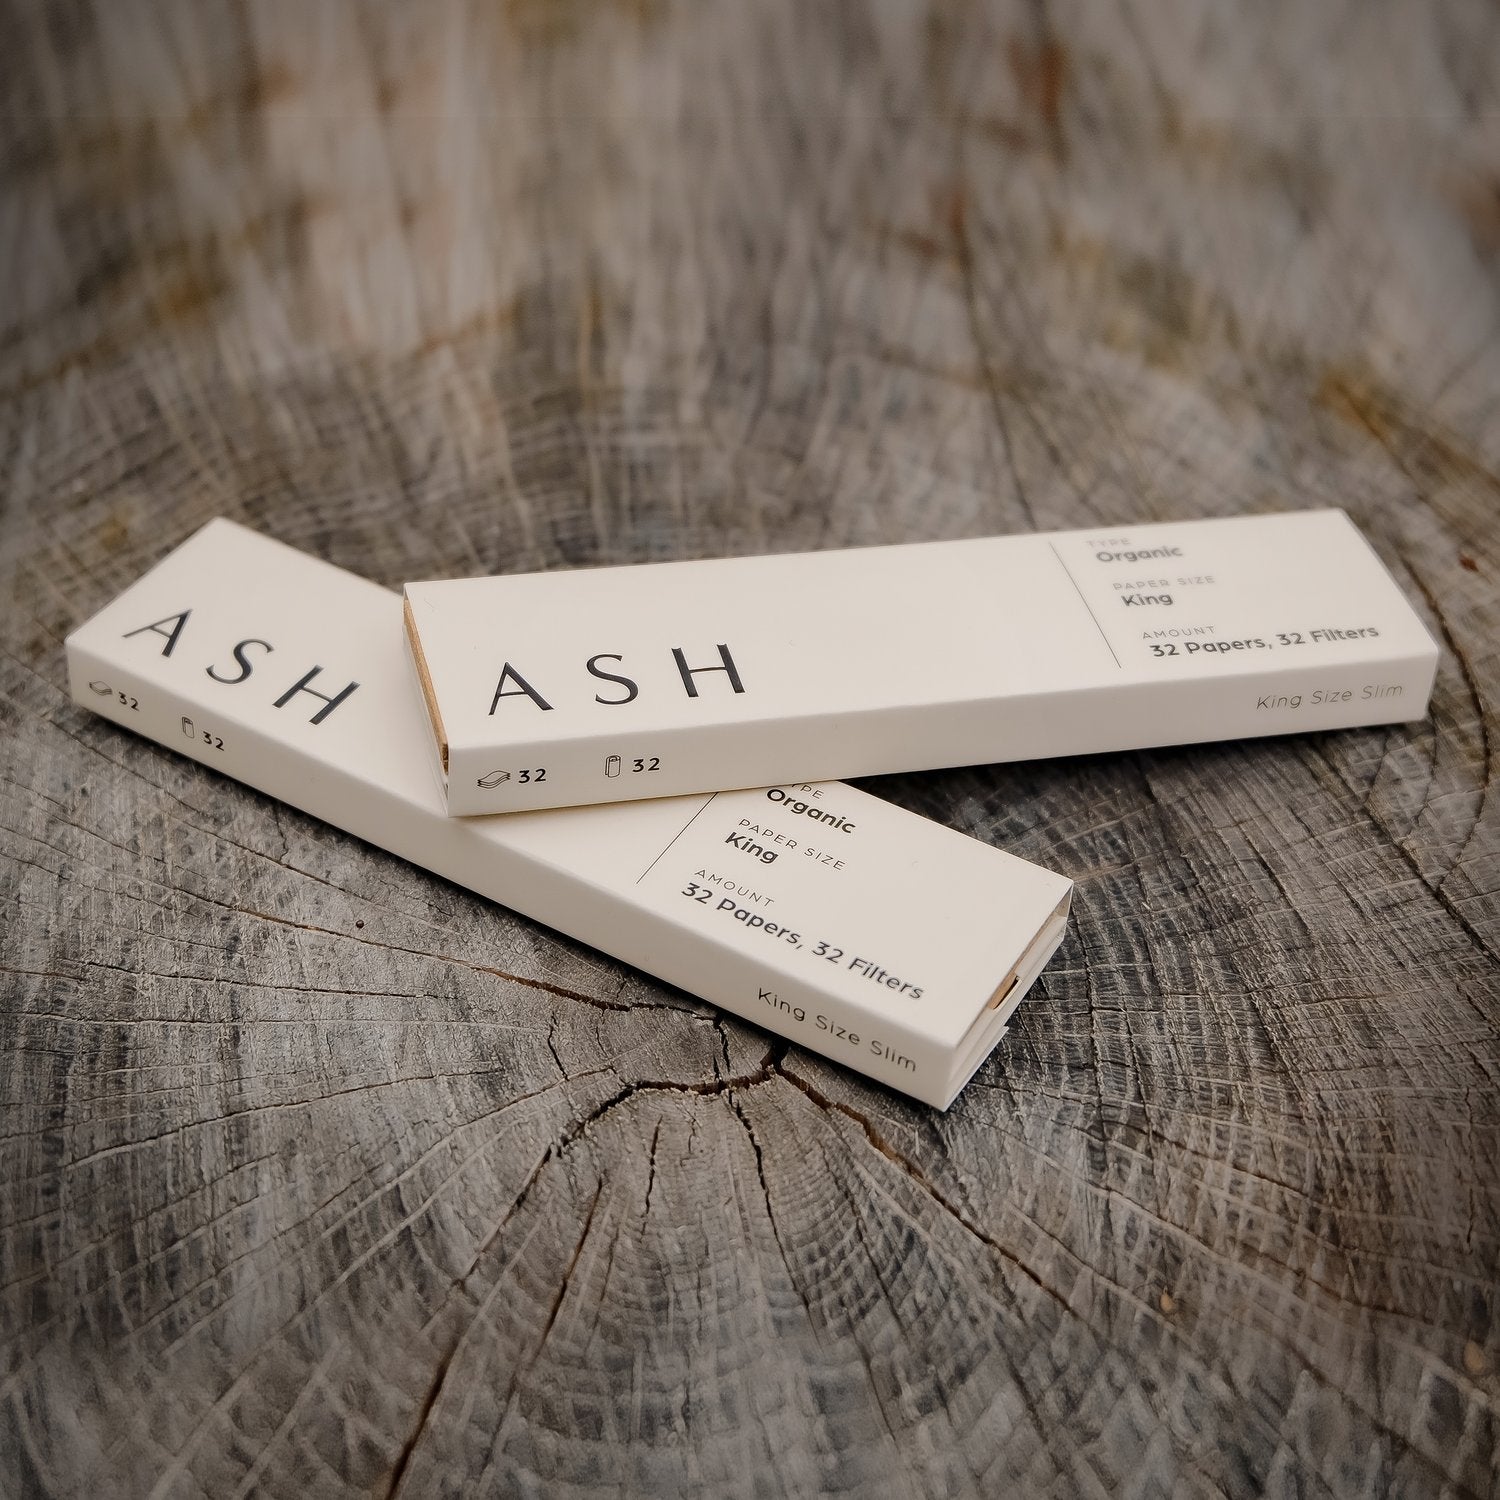  Rolling Paper | King | Organic by ASH ASH Perfumarie